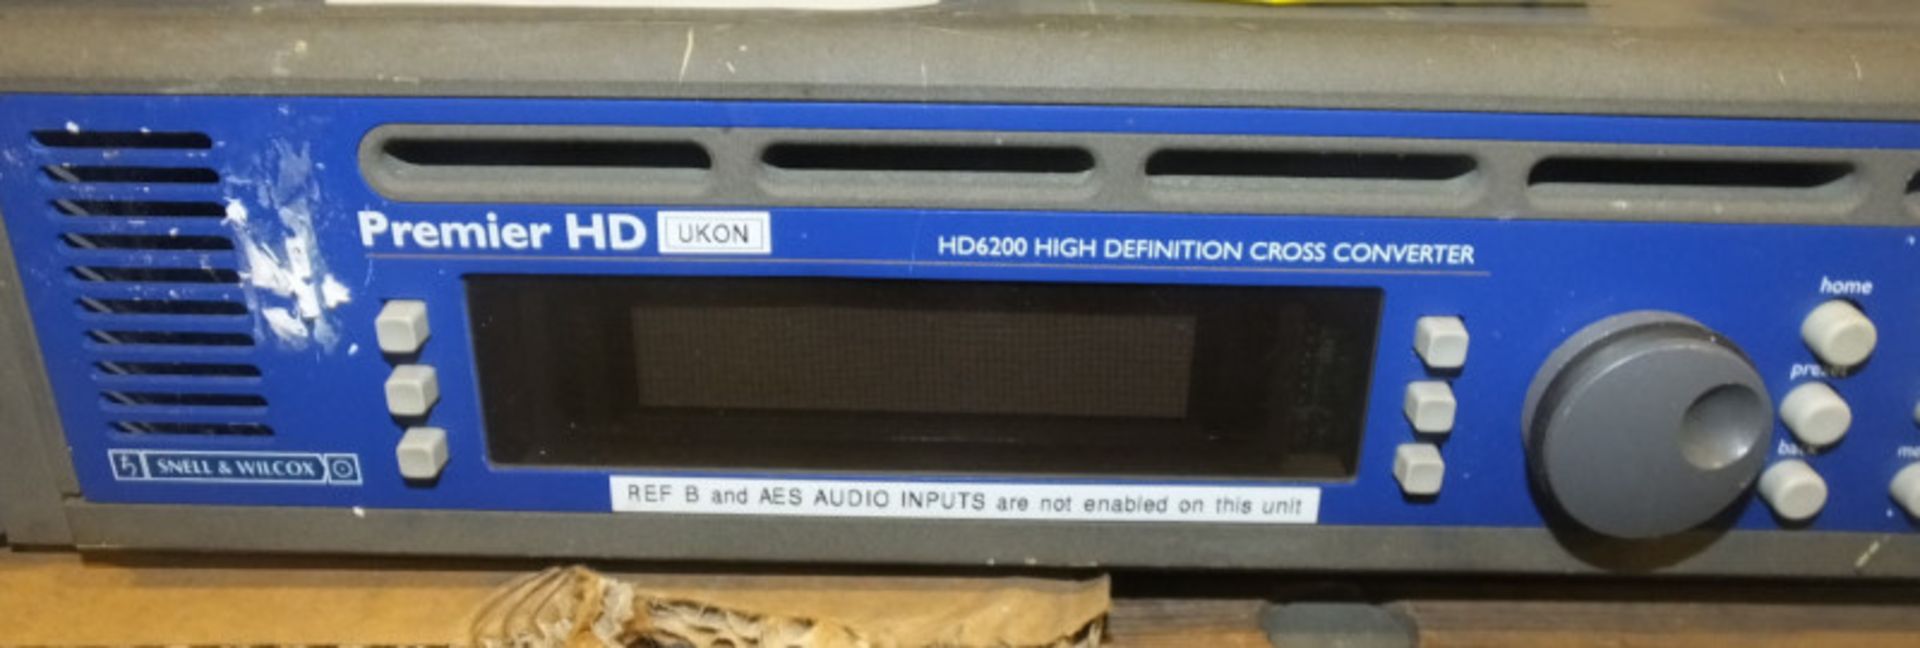 UKON Premier HD - HD6200 high definition cross convertor - Image 2 of 4